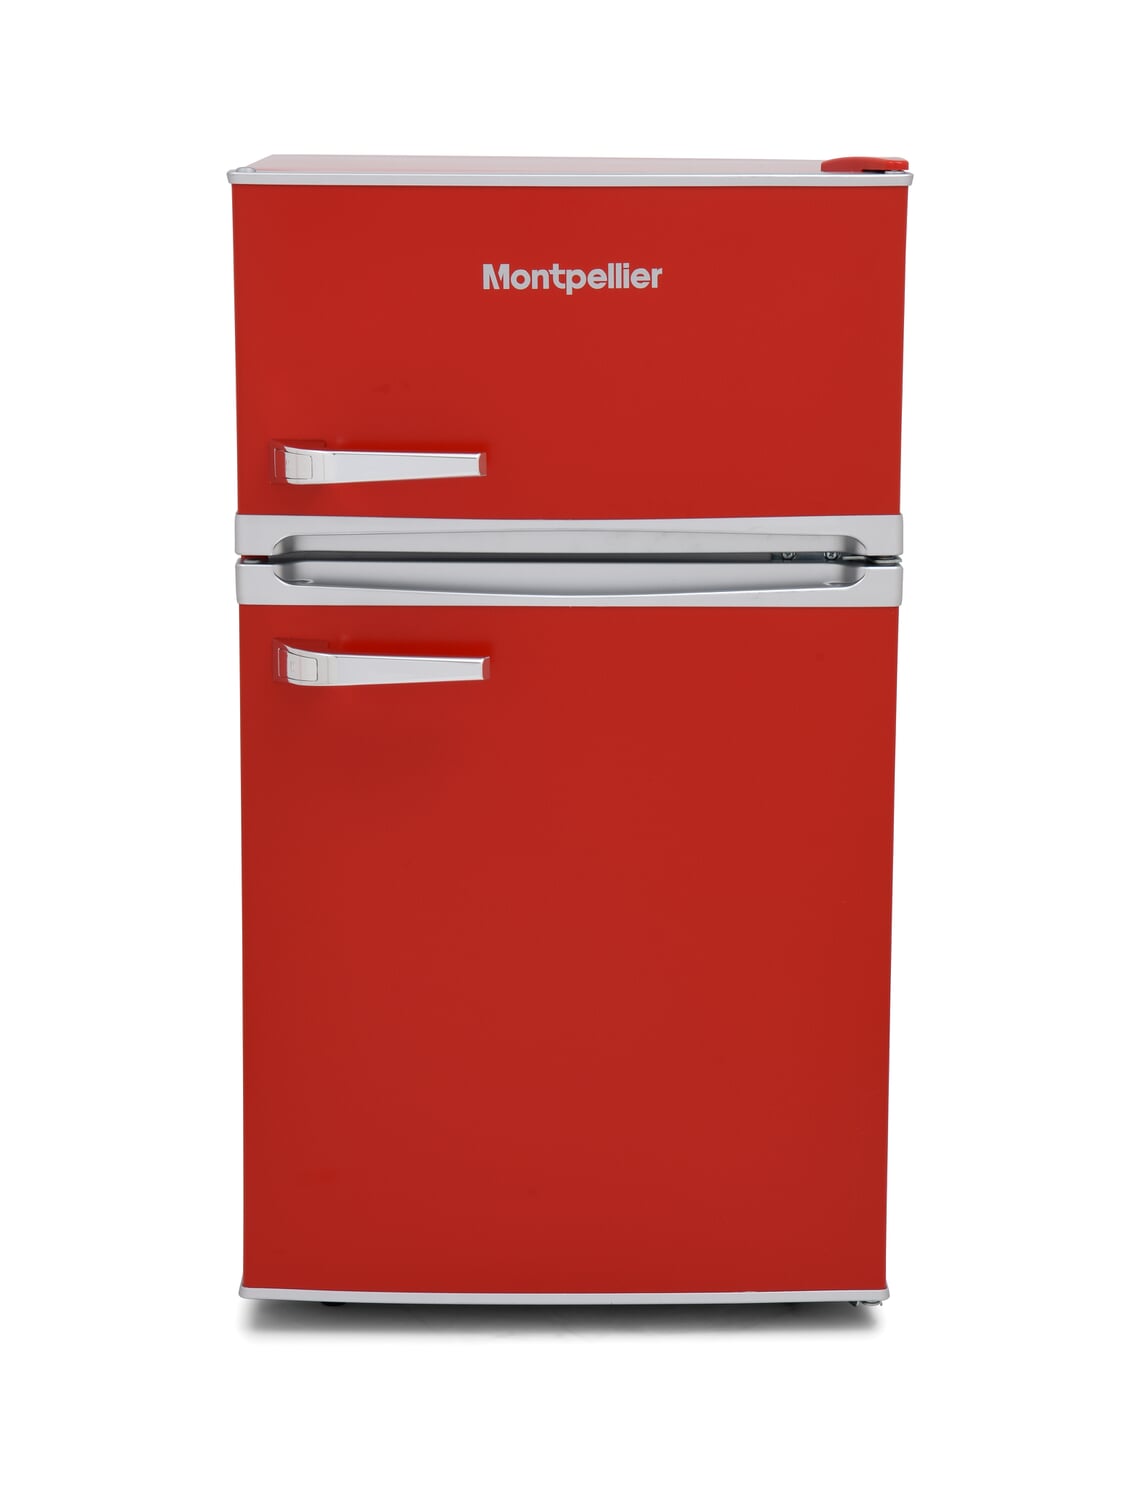 Montpellier MAB2035R Undercounter Retro Fridge Freezer in Red - Montpellier  Domestic Appliances Ltd